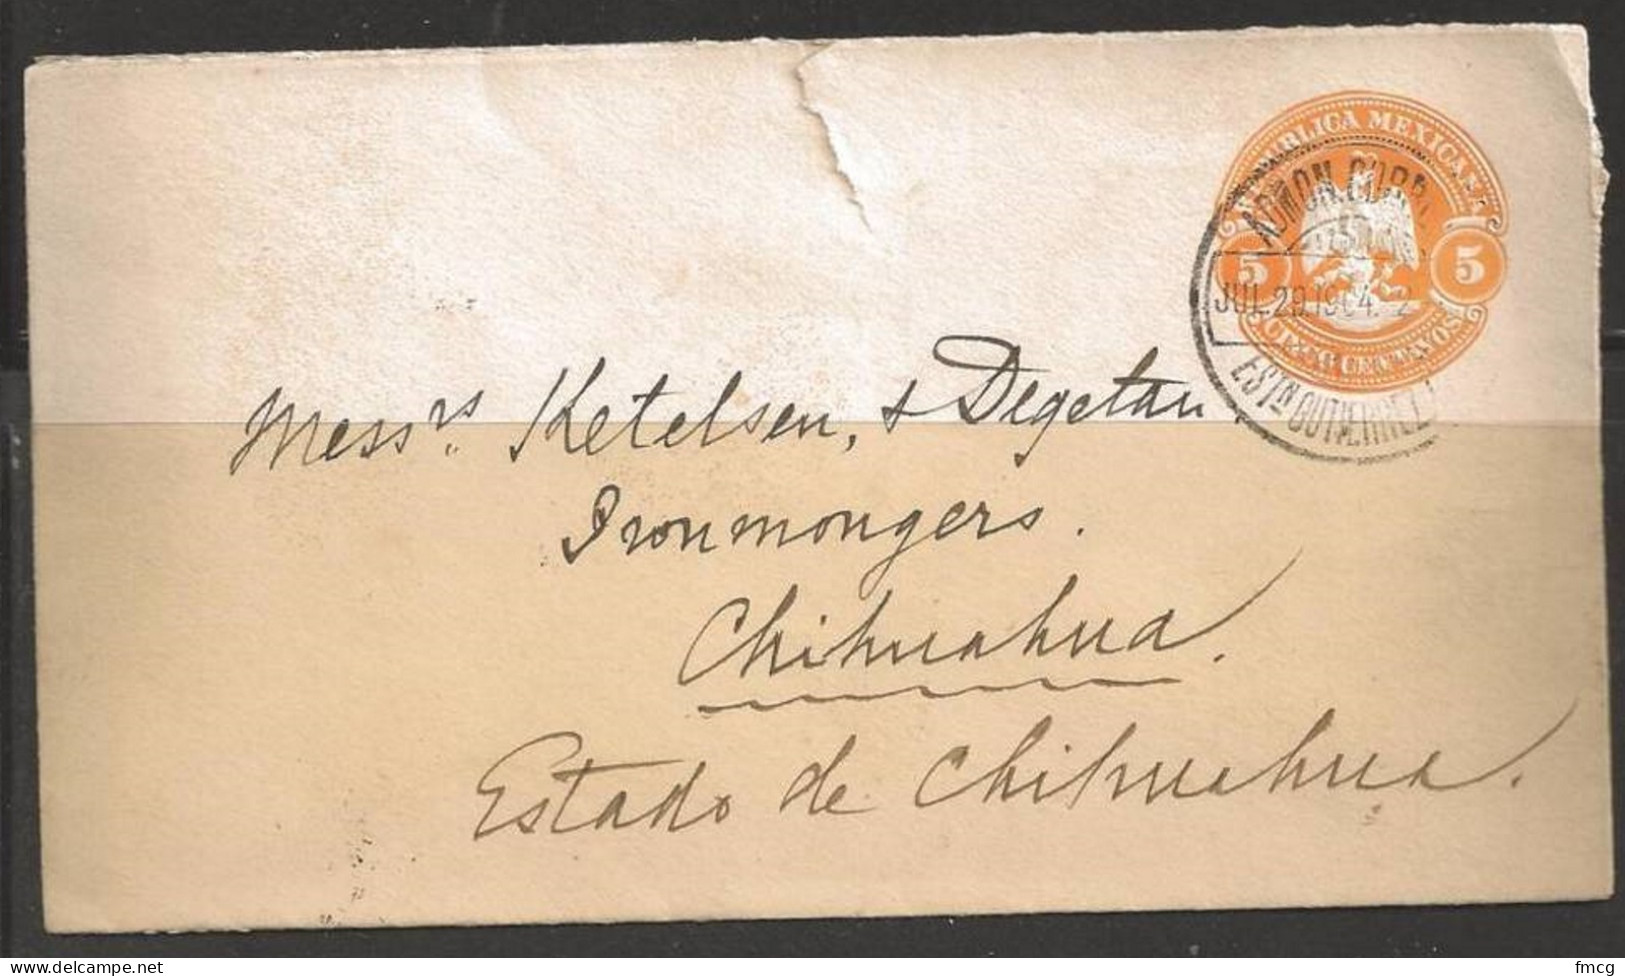 Mexico 1904 5c Postal Envelope Used Jul 29 1904, Chinuahua - Mexiko